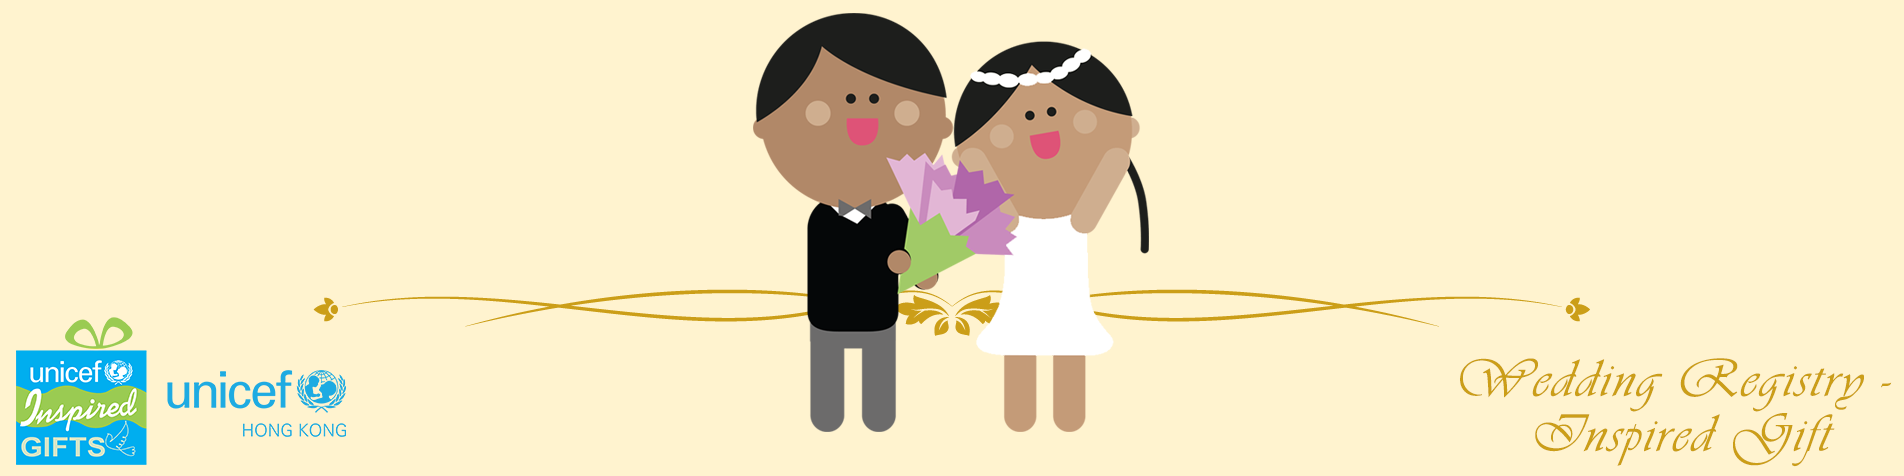 UNICEF HK's Wedding Registry – Inspired Gifts